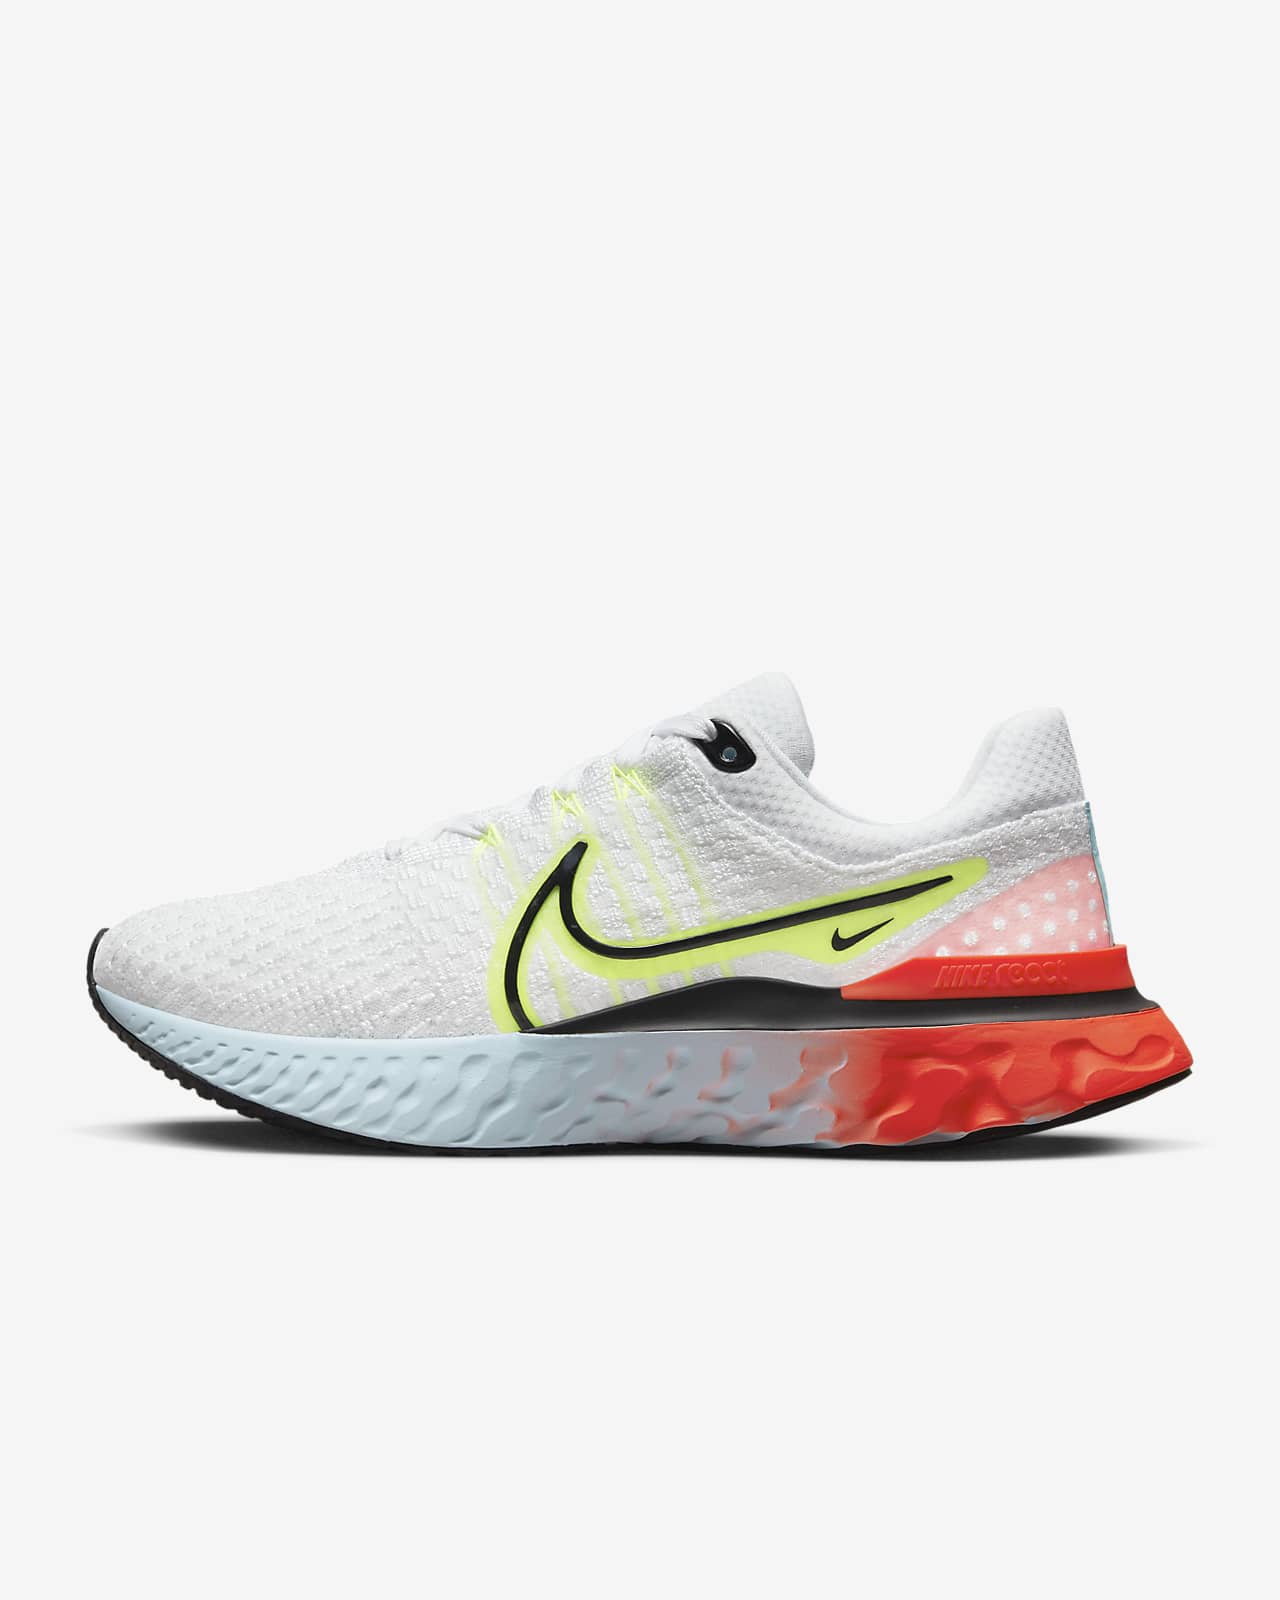 Nike Free 5.0 Volt Neon Orange/black Running Shoes Lace Up Women's  Size 6